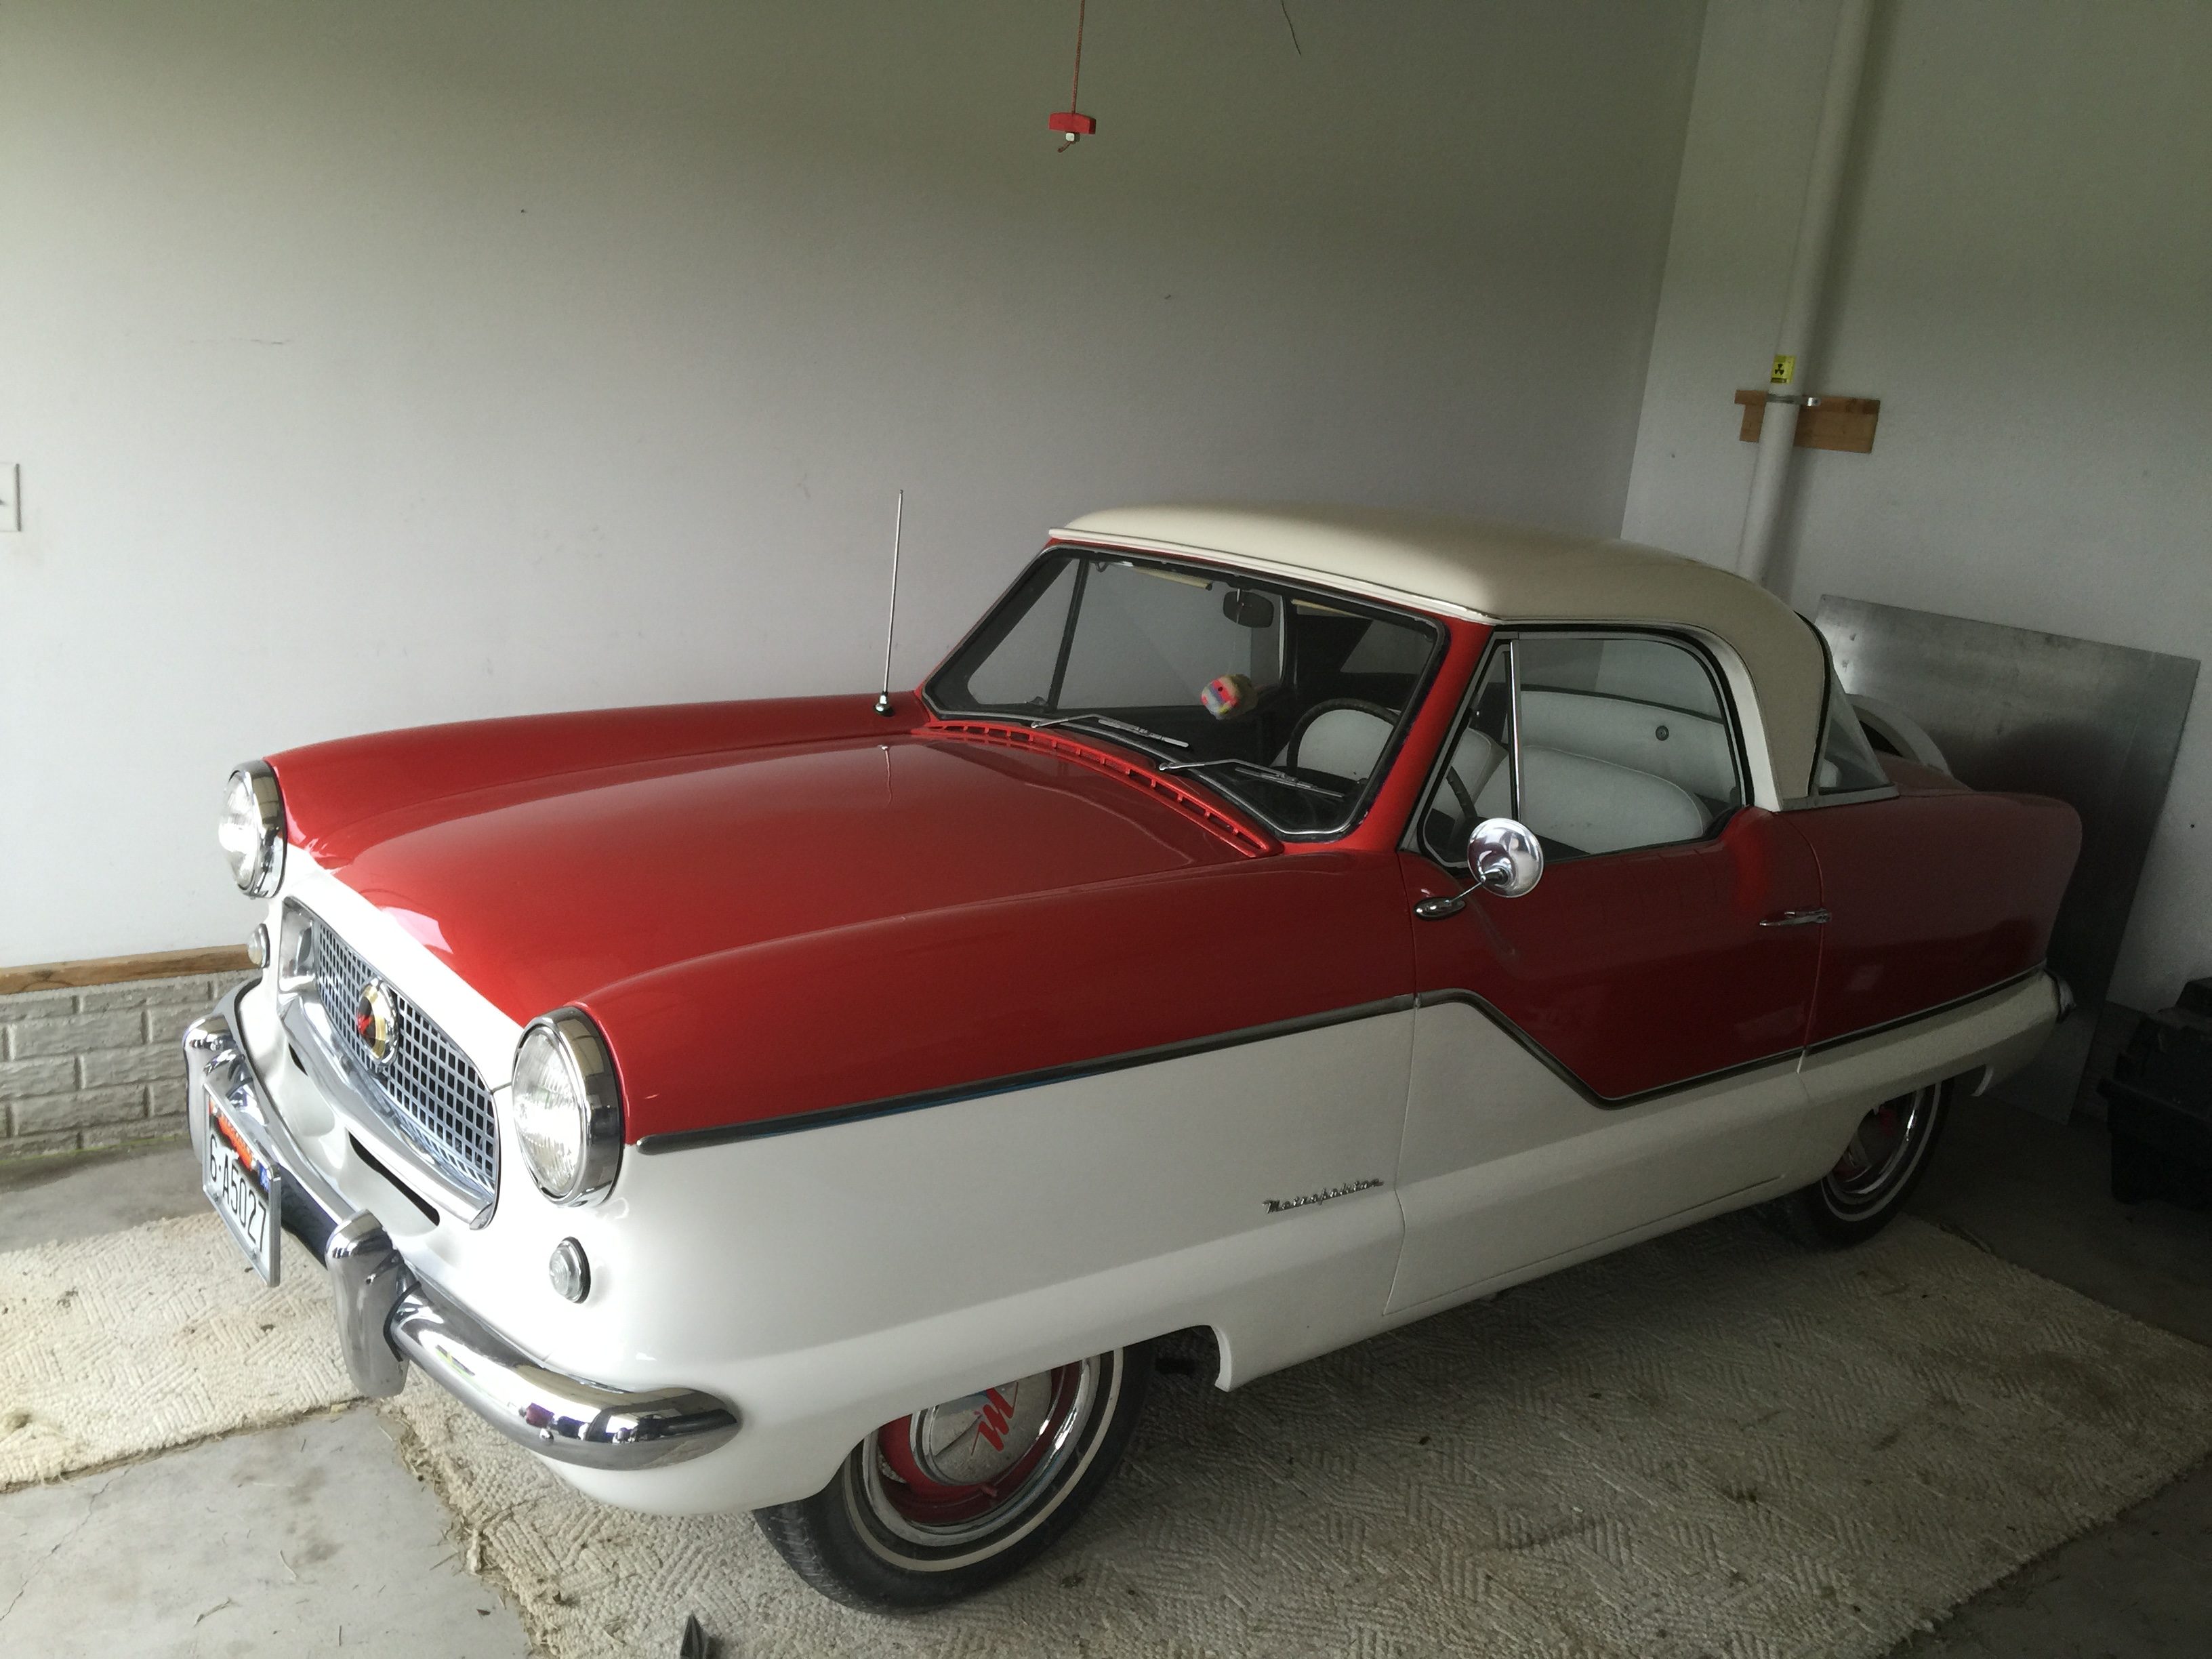 1961 Nash Metropolitan, Auto Interior Restoration—A Sight to See